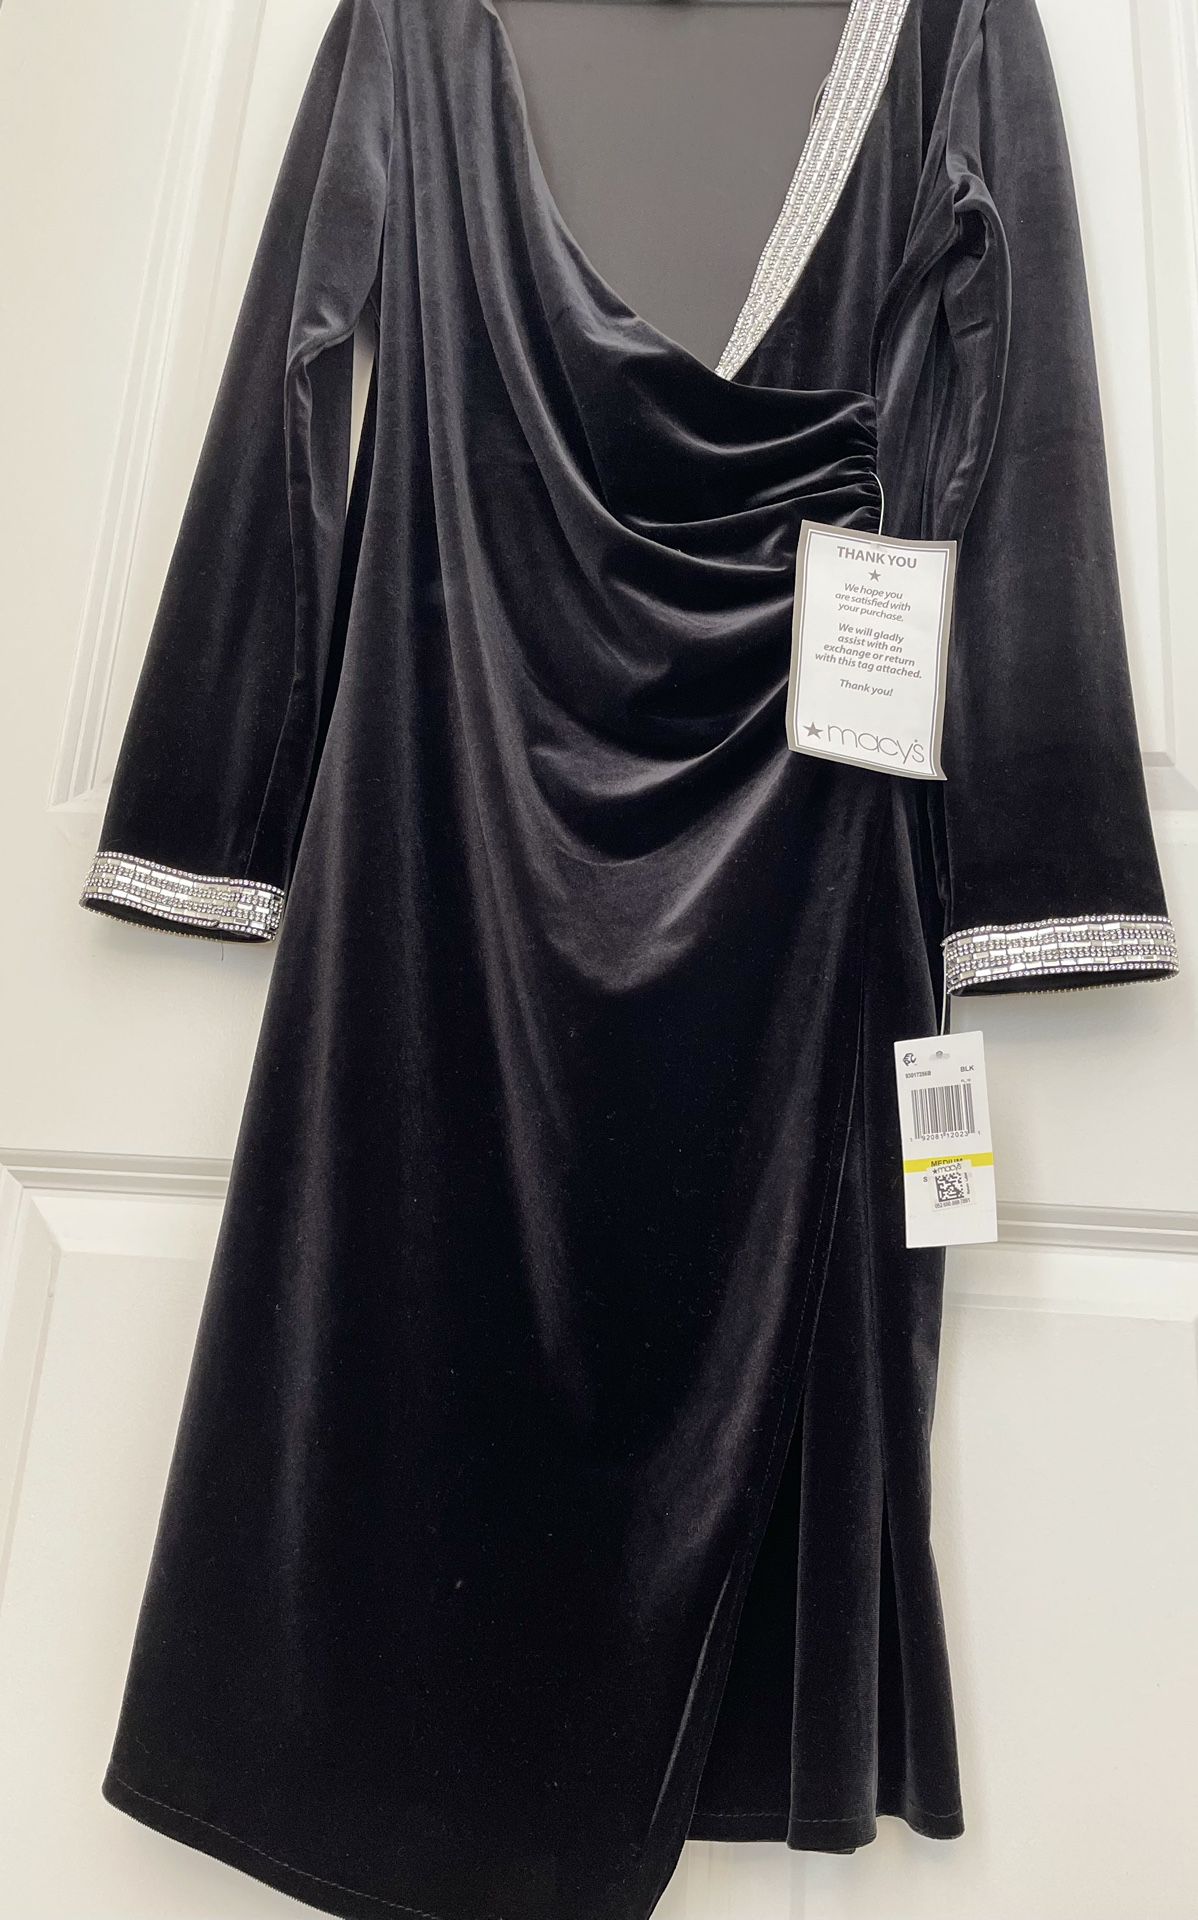 MSK  Women's Velvet Faux Wrap Black Dress-Size Medium-Party-Cocktail-Holiday Dress